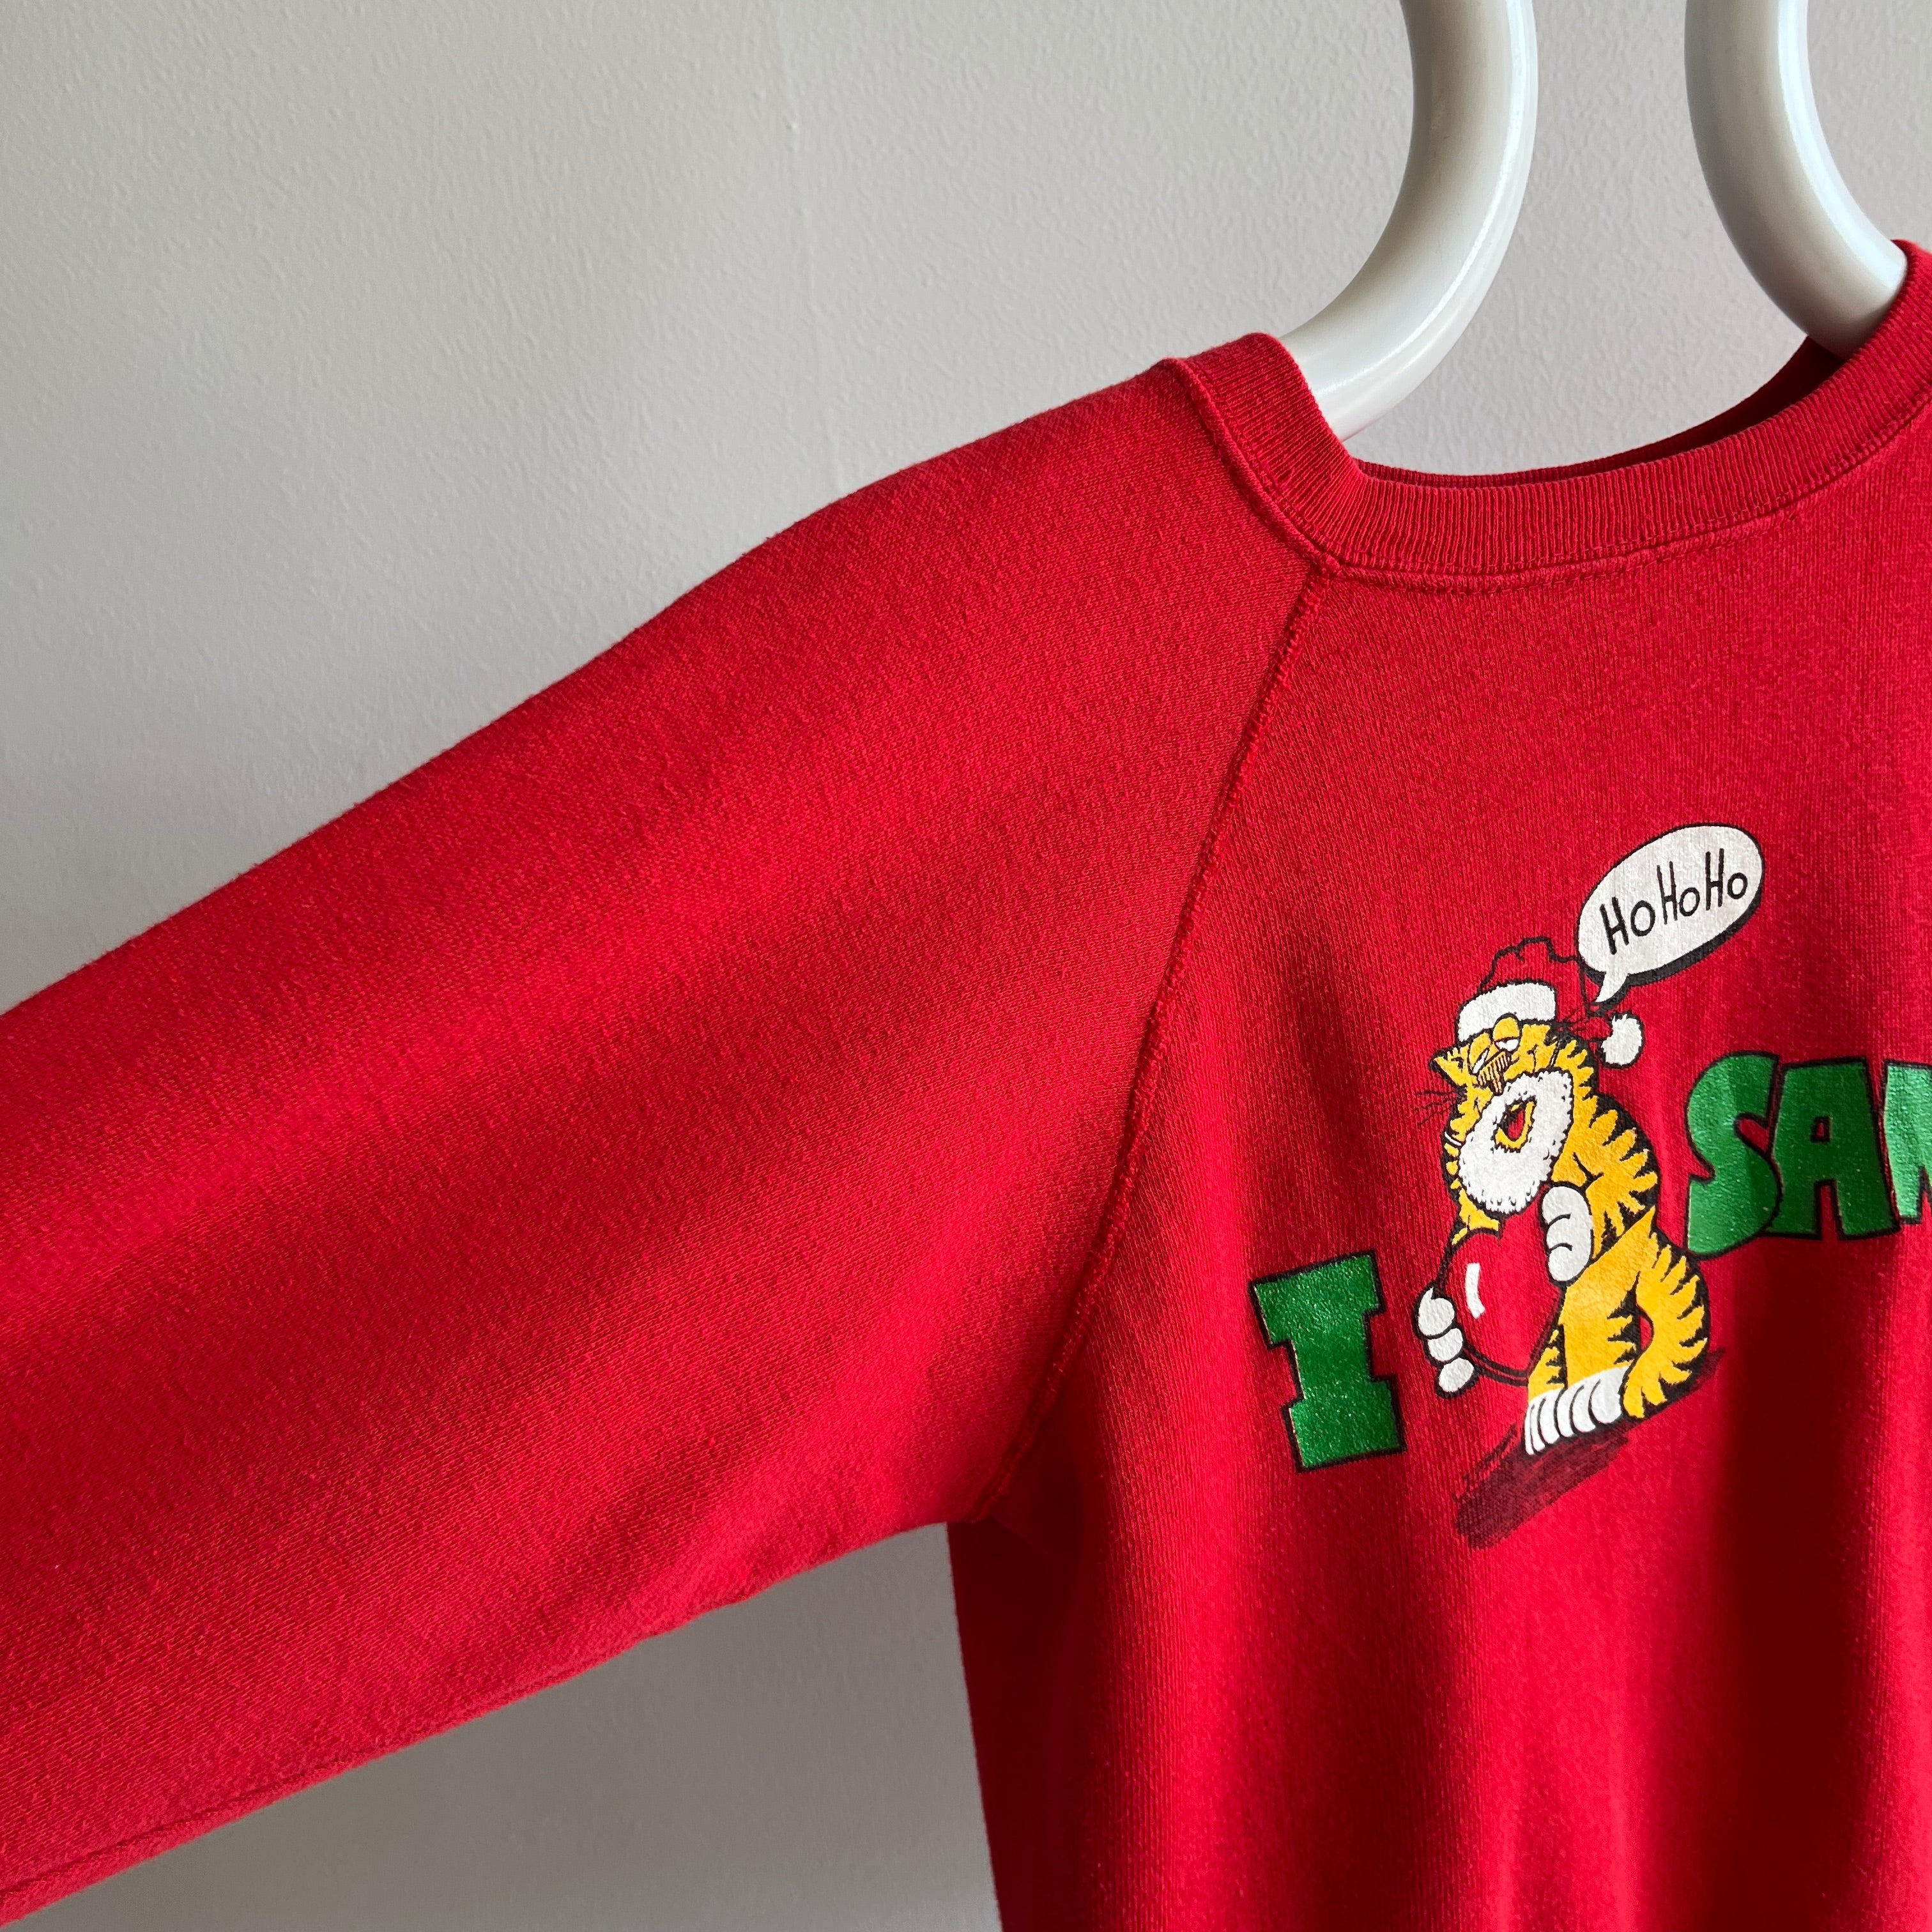 1985 Garfield as Santa Sweatshirt - Collectible